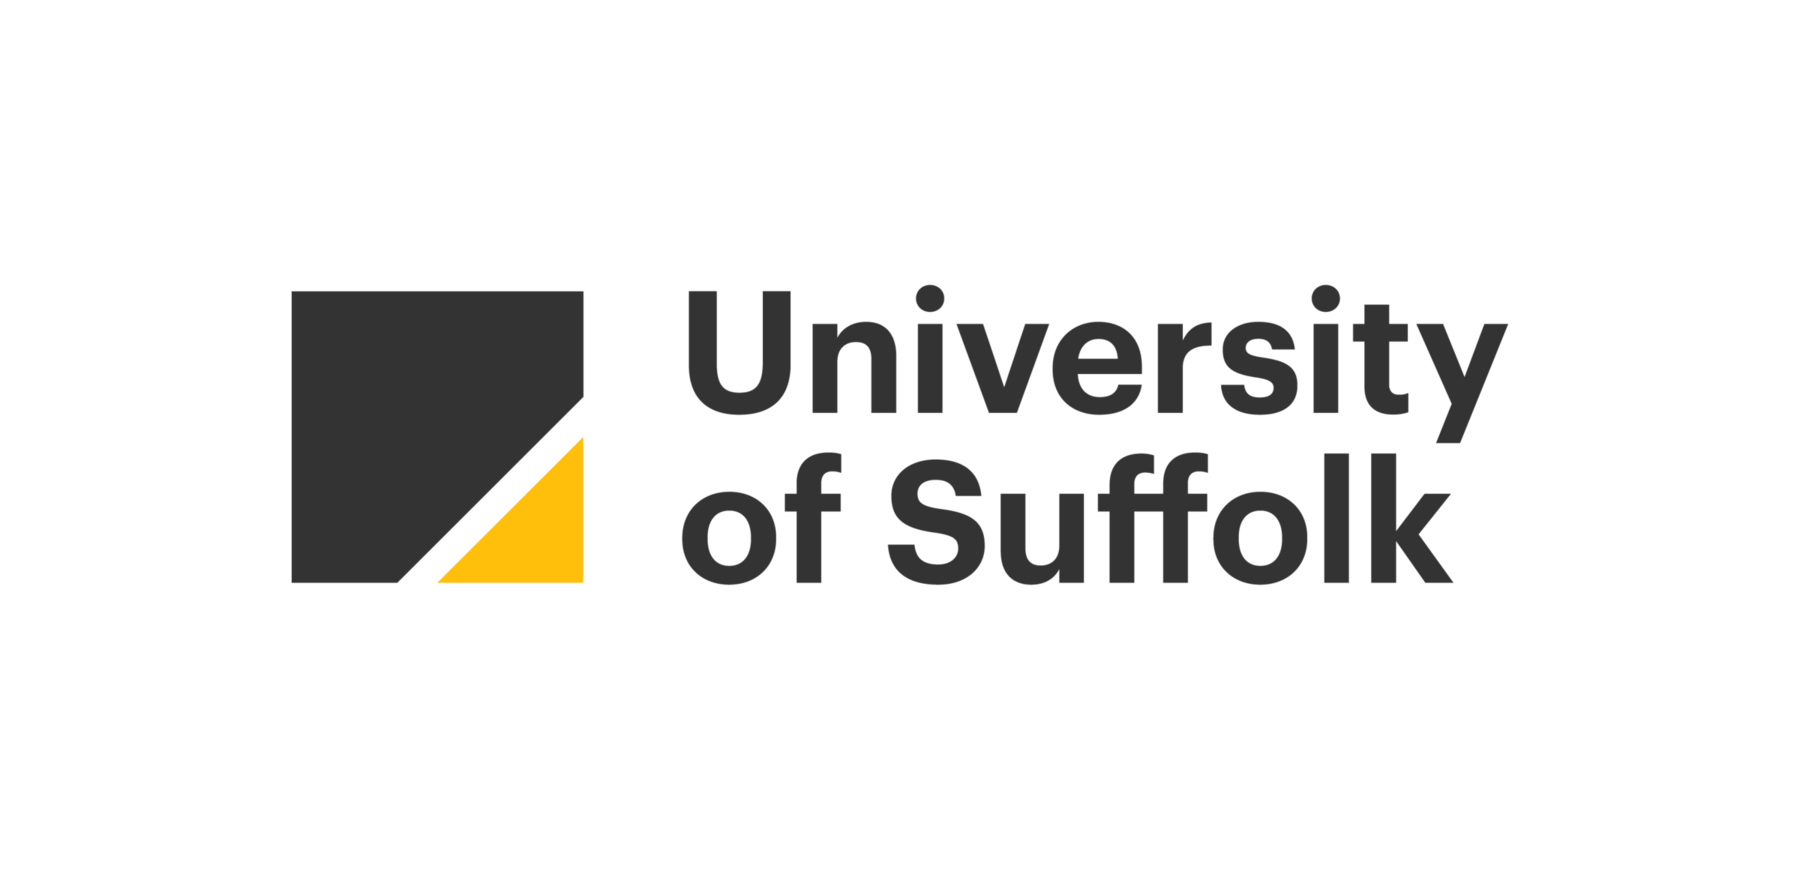 University of Suffolk Logo